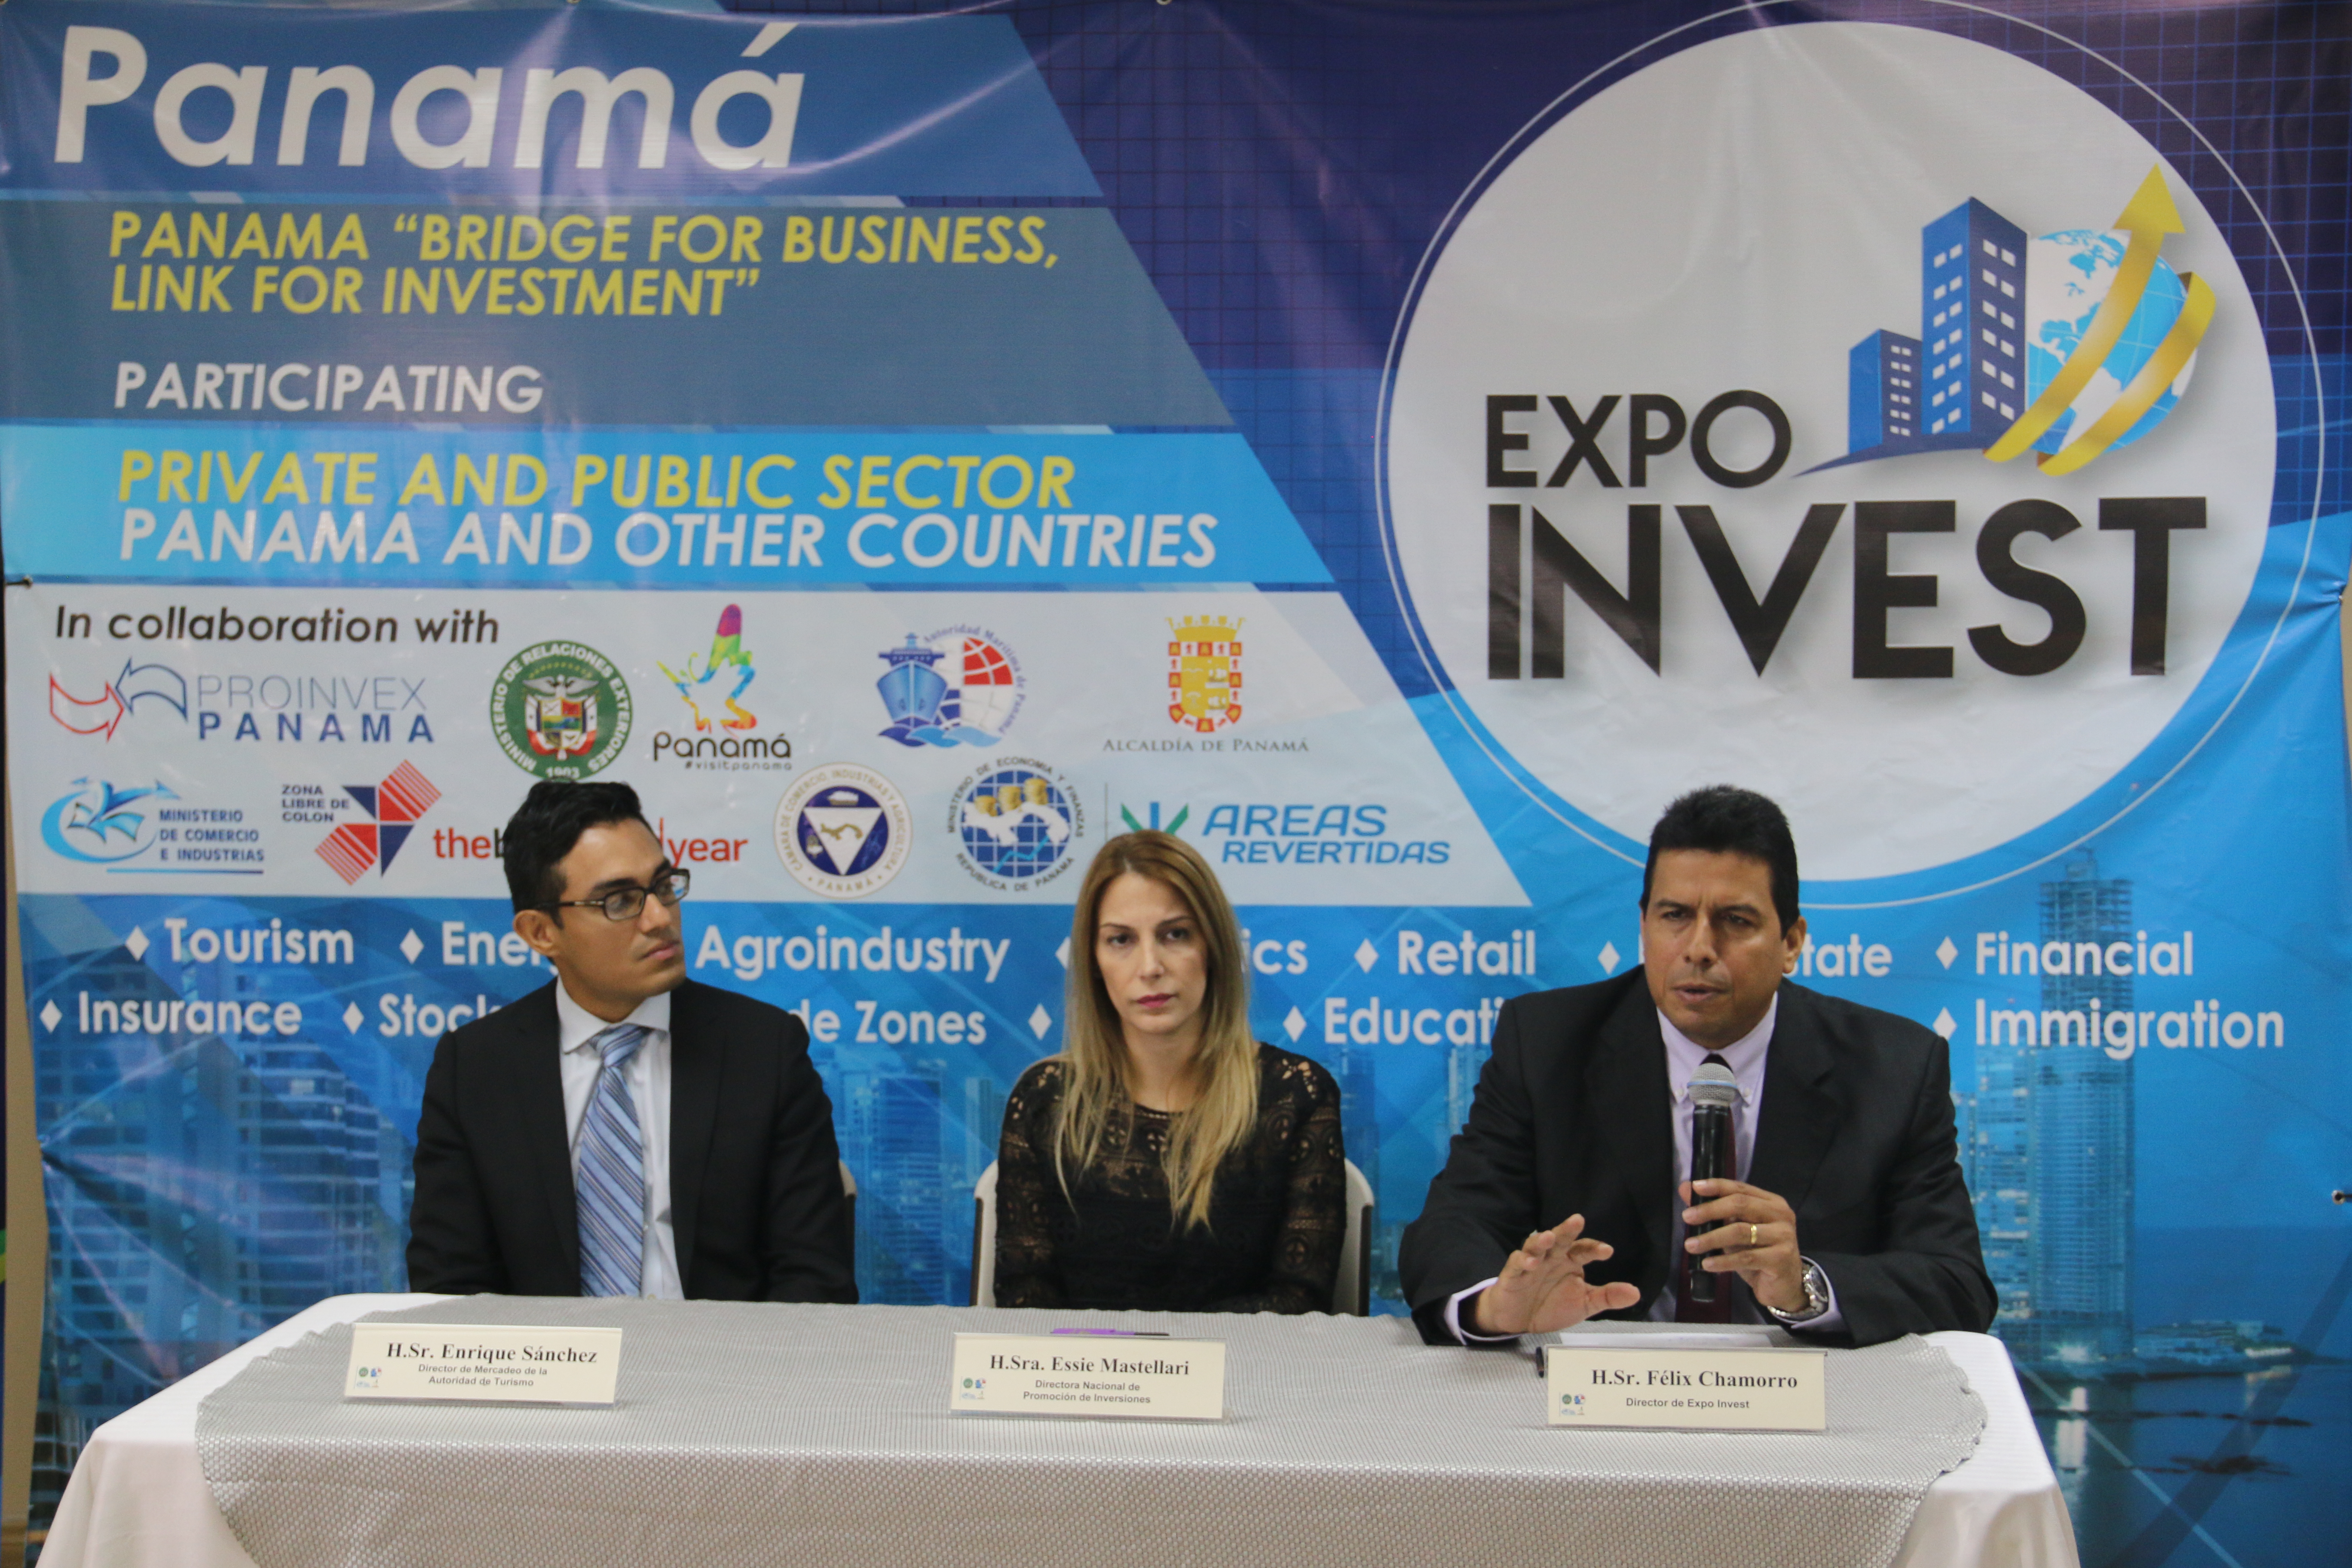 Expo Invest Panama 2016